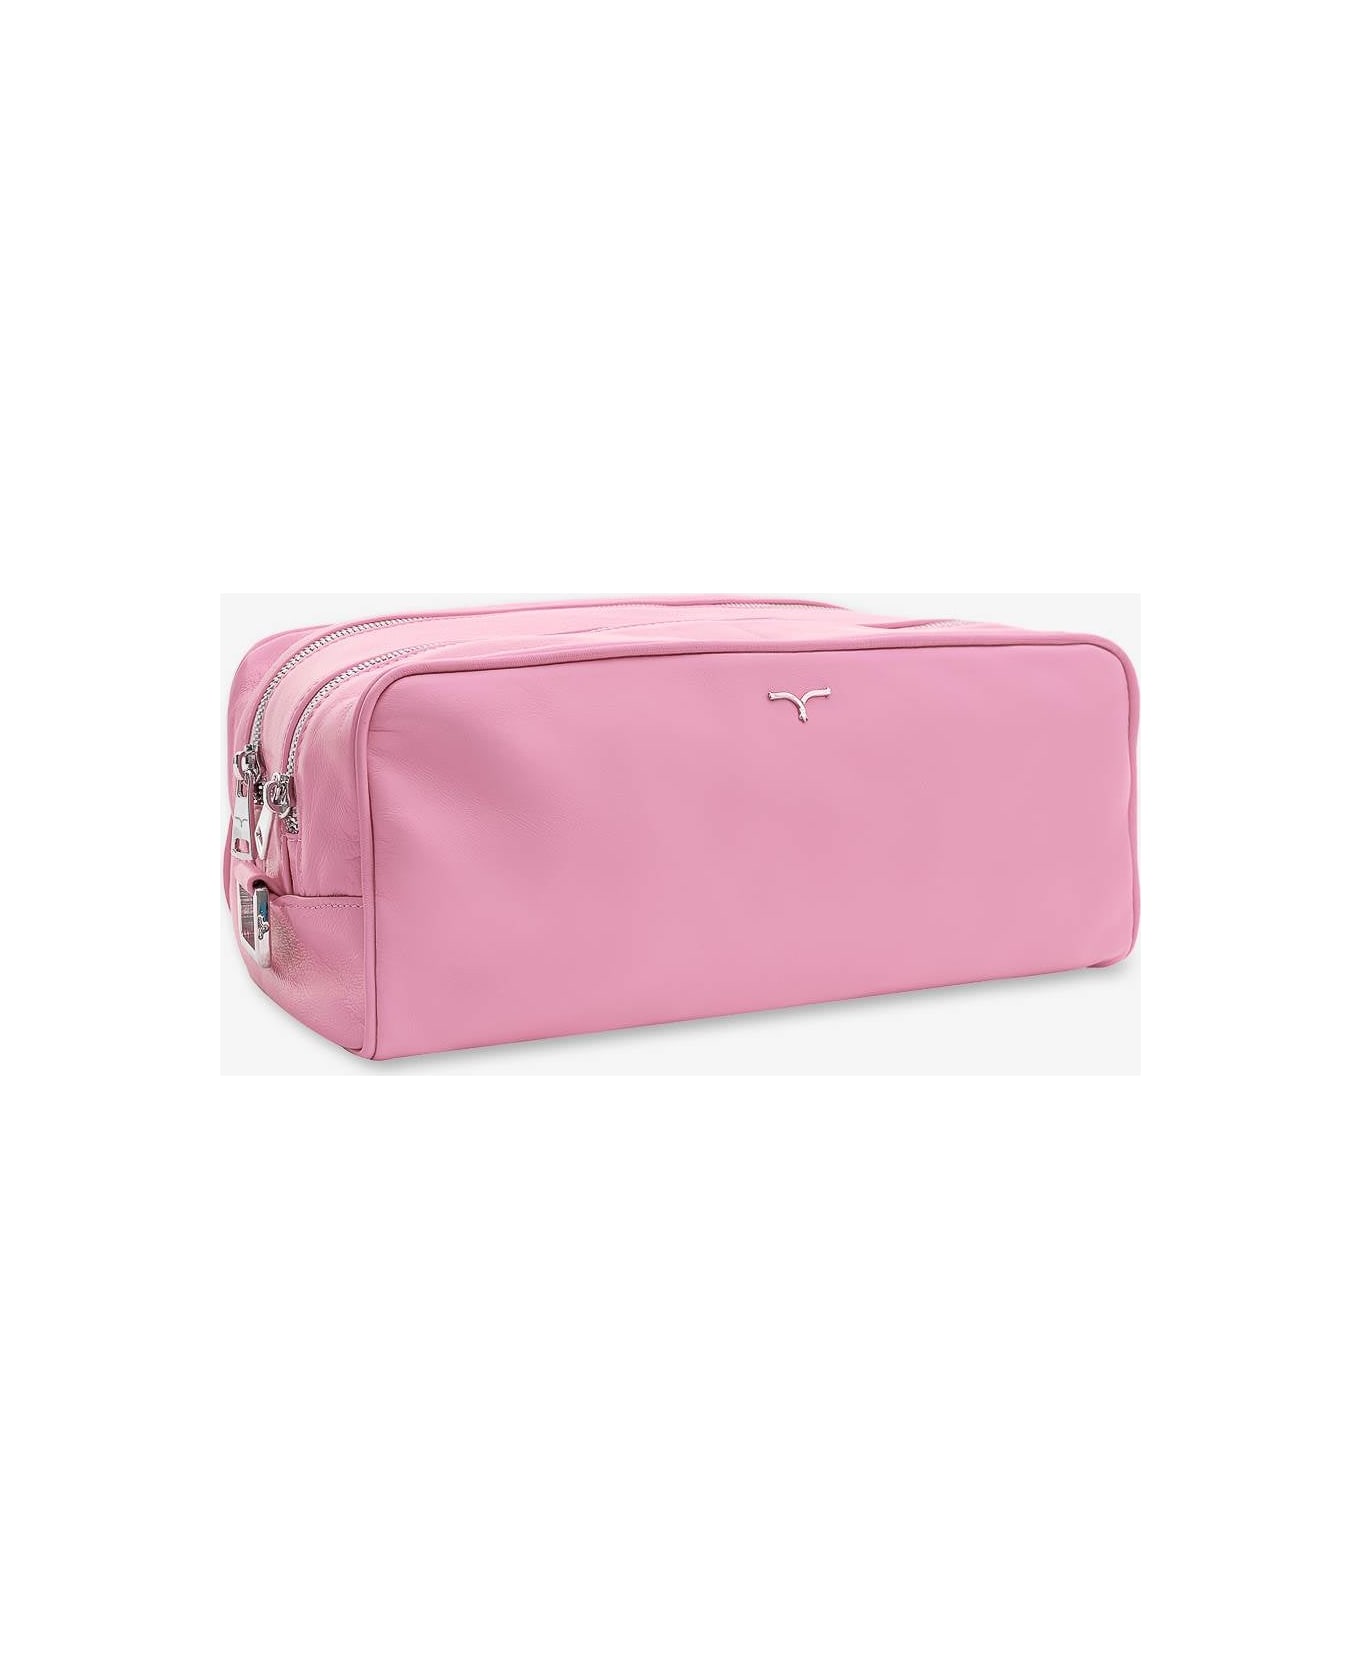 Larusmiani Wash Bag'tzar' Luggage - Pink トラベルバッグ